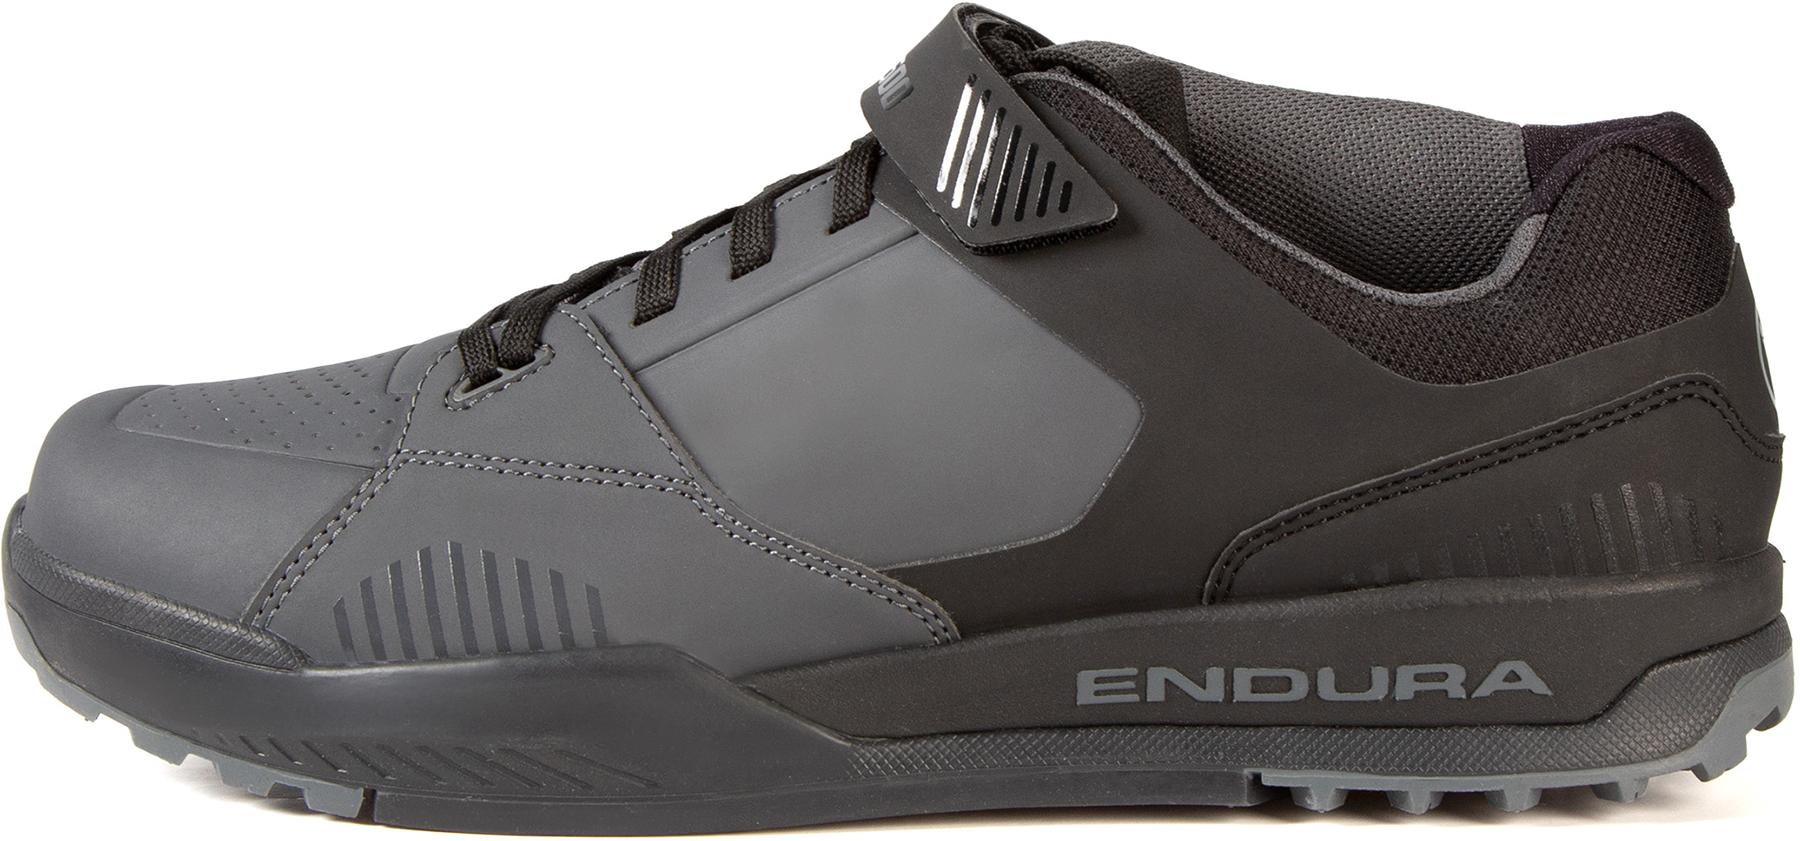 Endura Mt500 Burner Clipless Mtb Shoes - Black